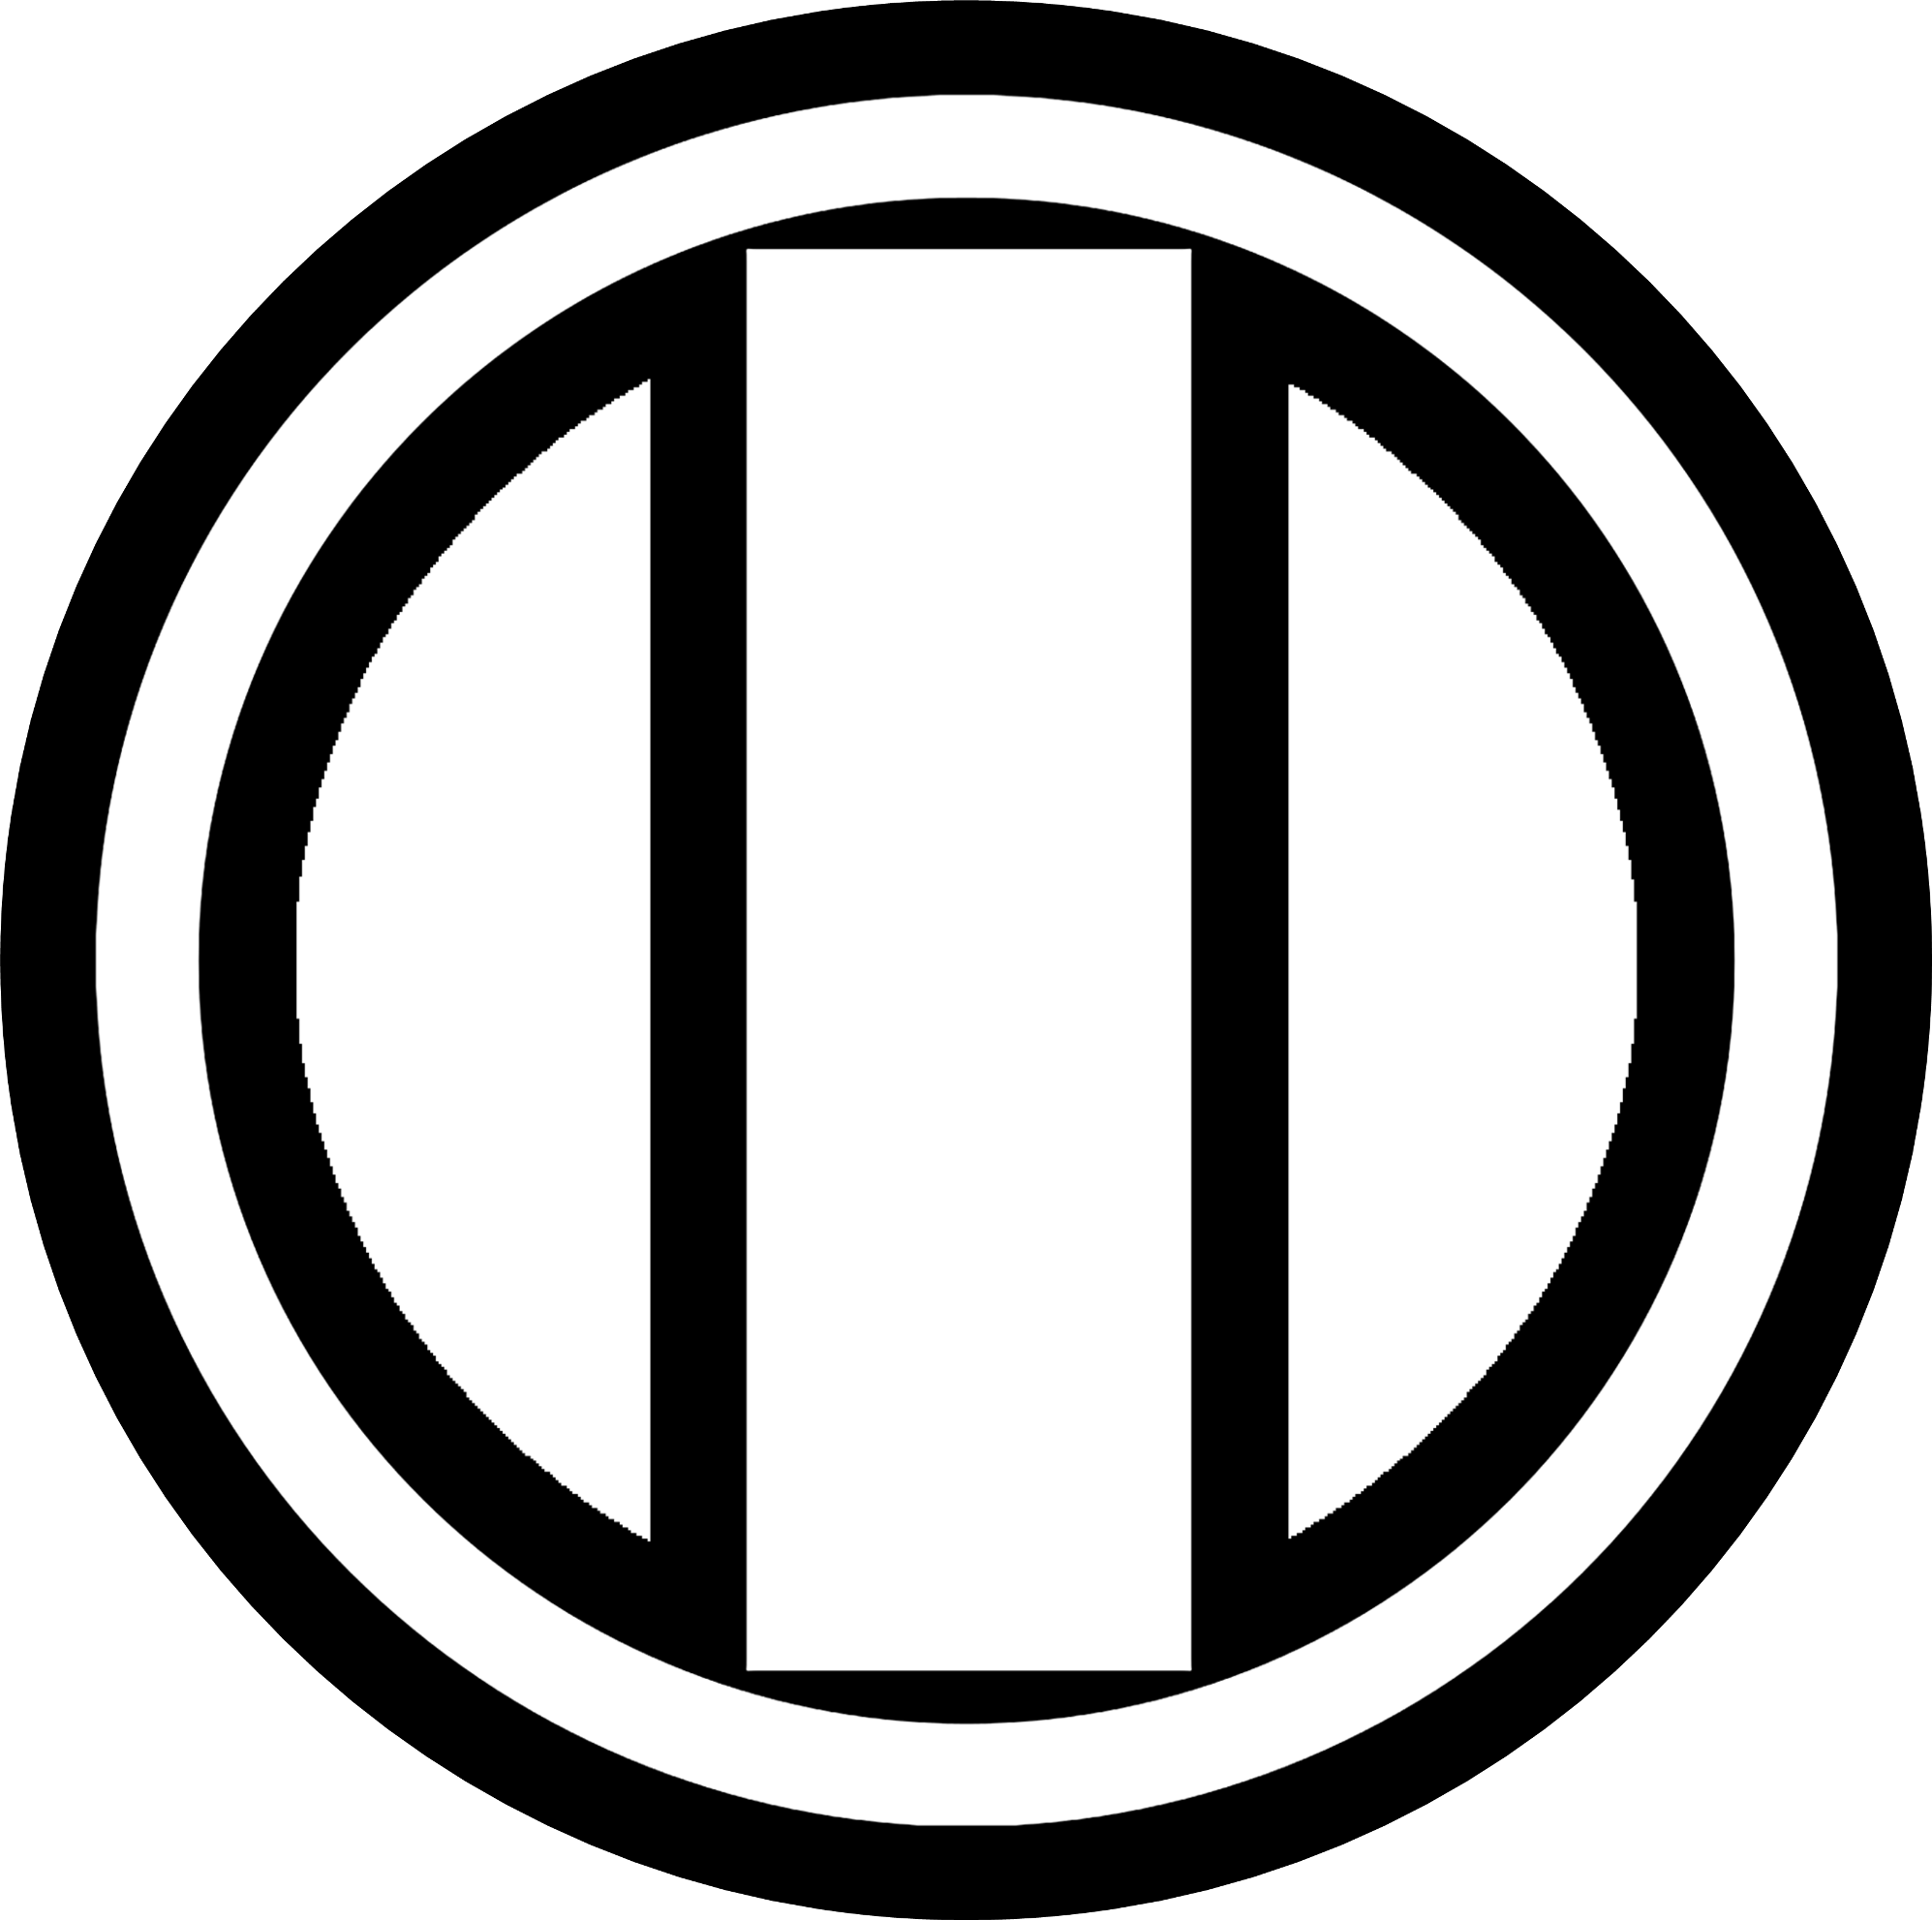 Канал пд. ОРТ лого 1995. Первый канал 1995. Телеканал ОРТ логотип. ОРТ 1997 логотип.